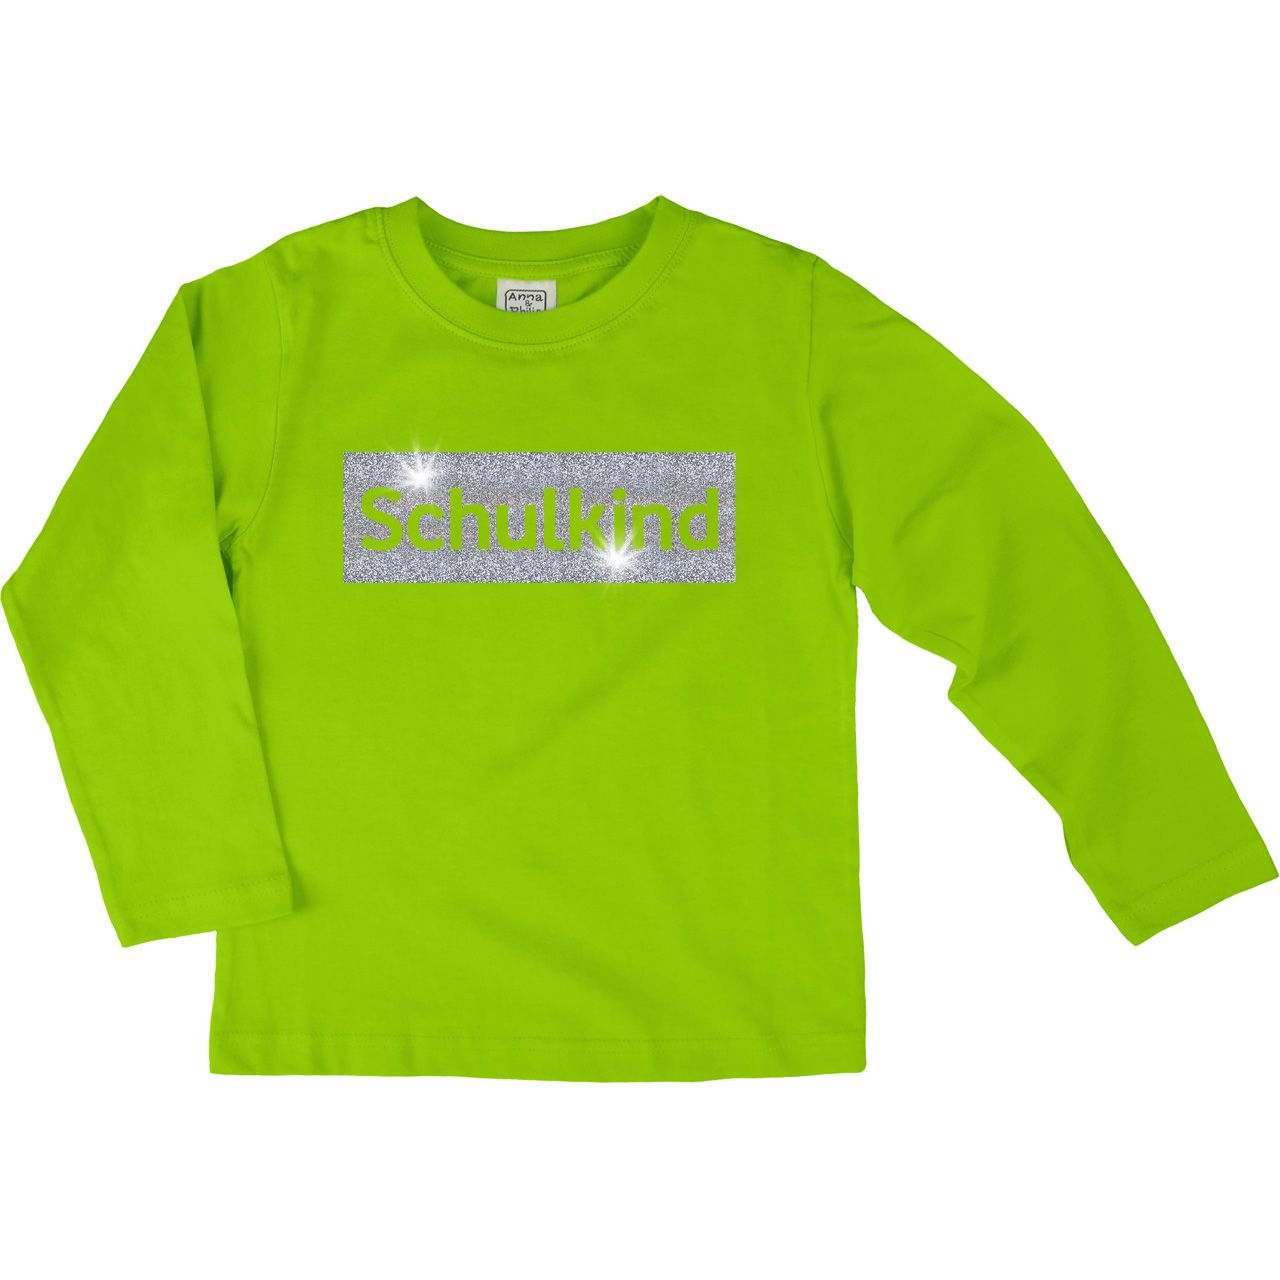 Schulkind Glitzer Kinder Langarm Shirt hellgrün 122 / 128